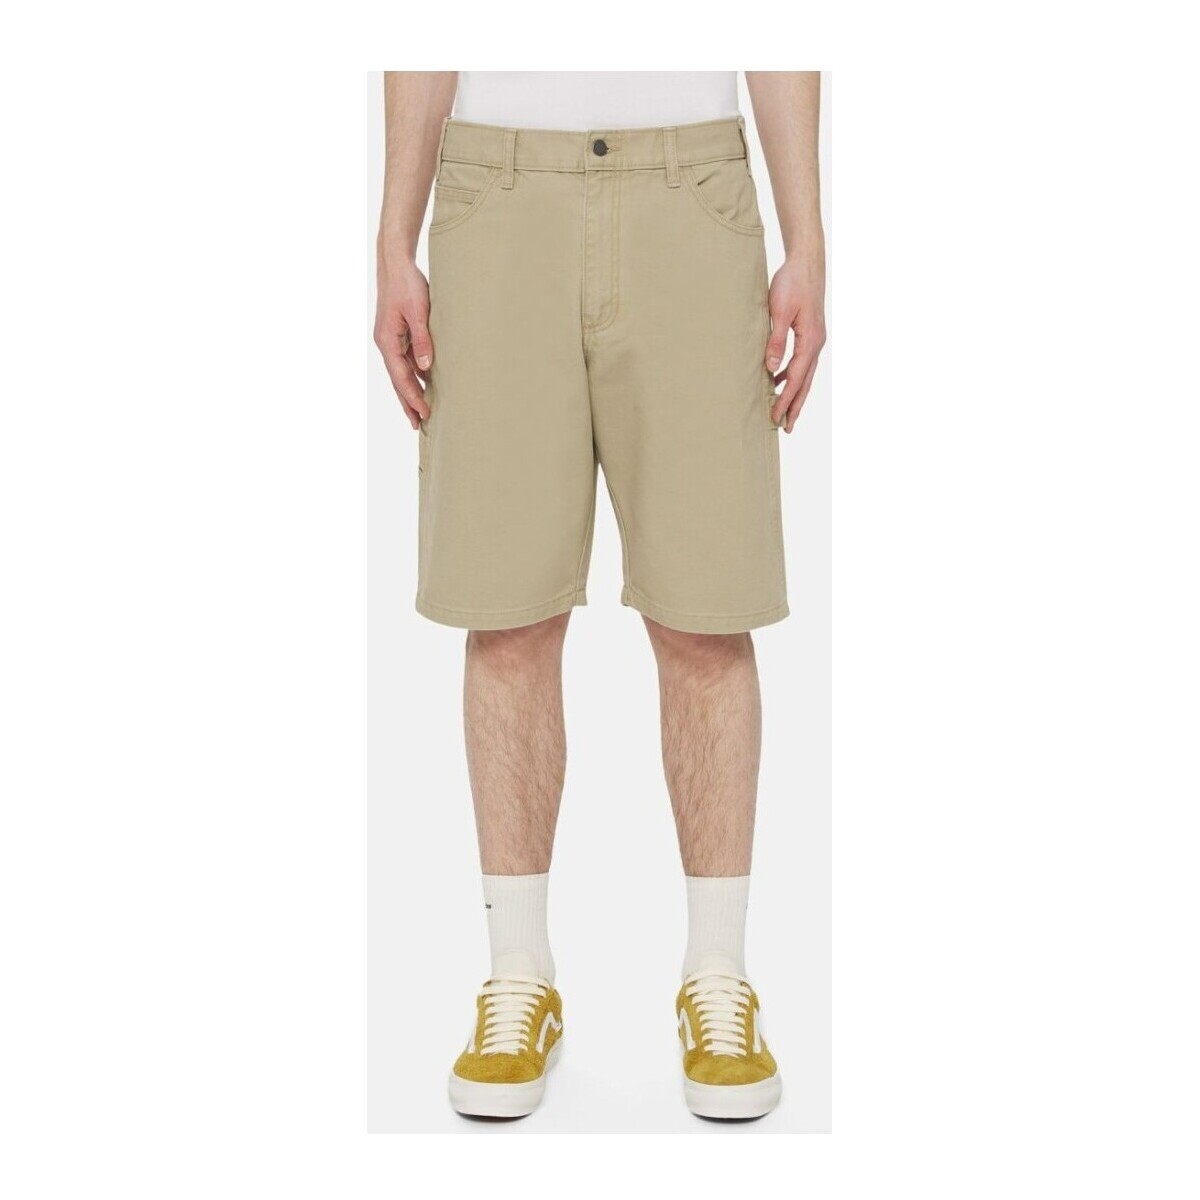 Kleidung Herren Shorts / Bermudas Dickies  Beige